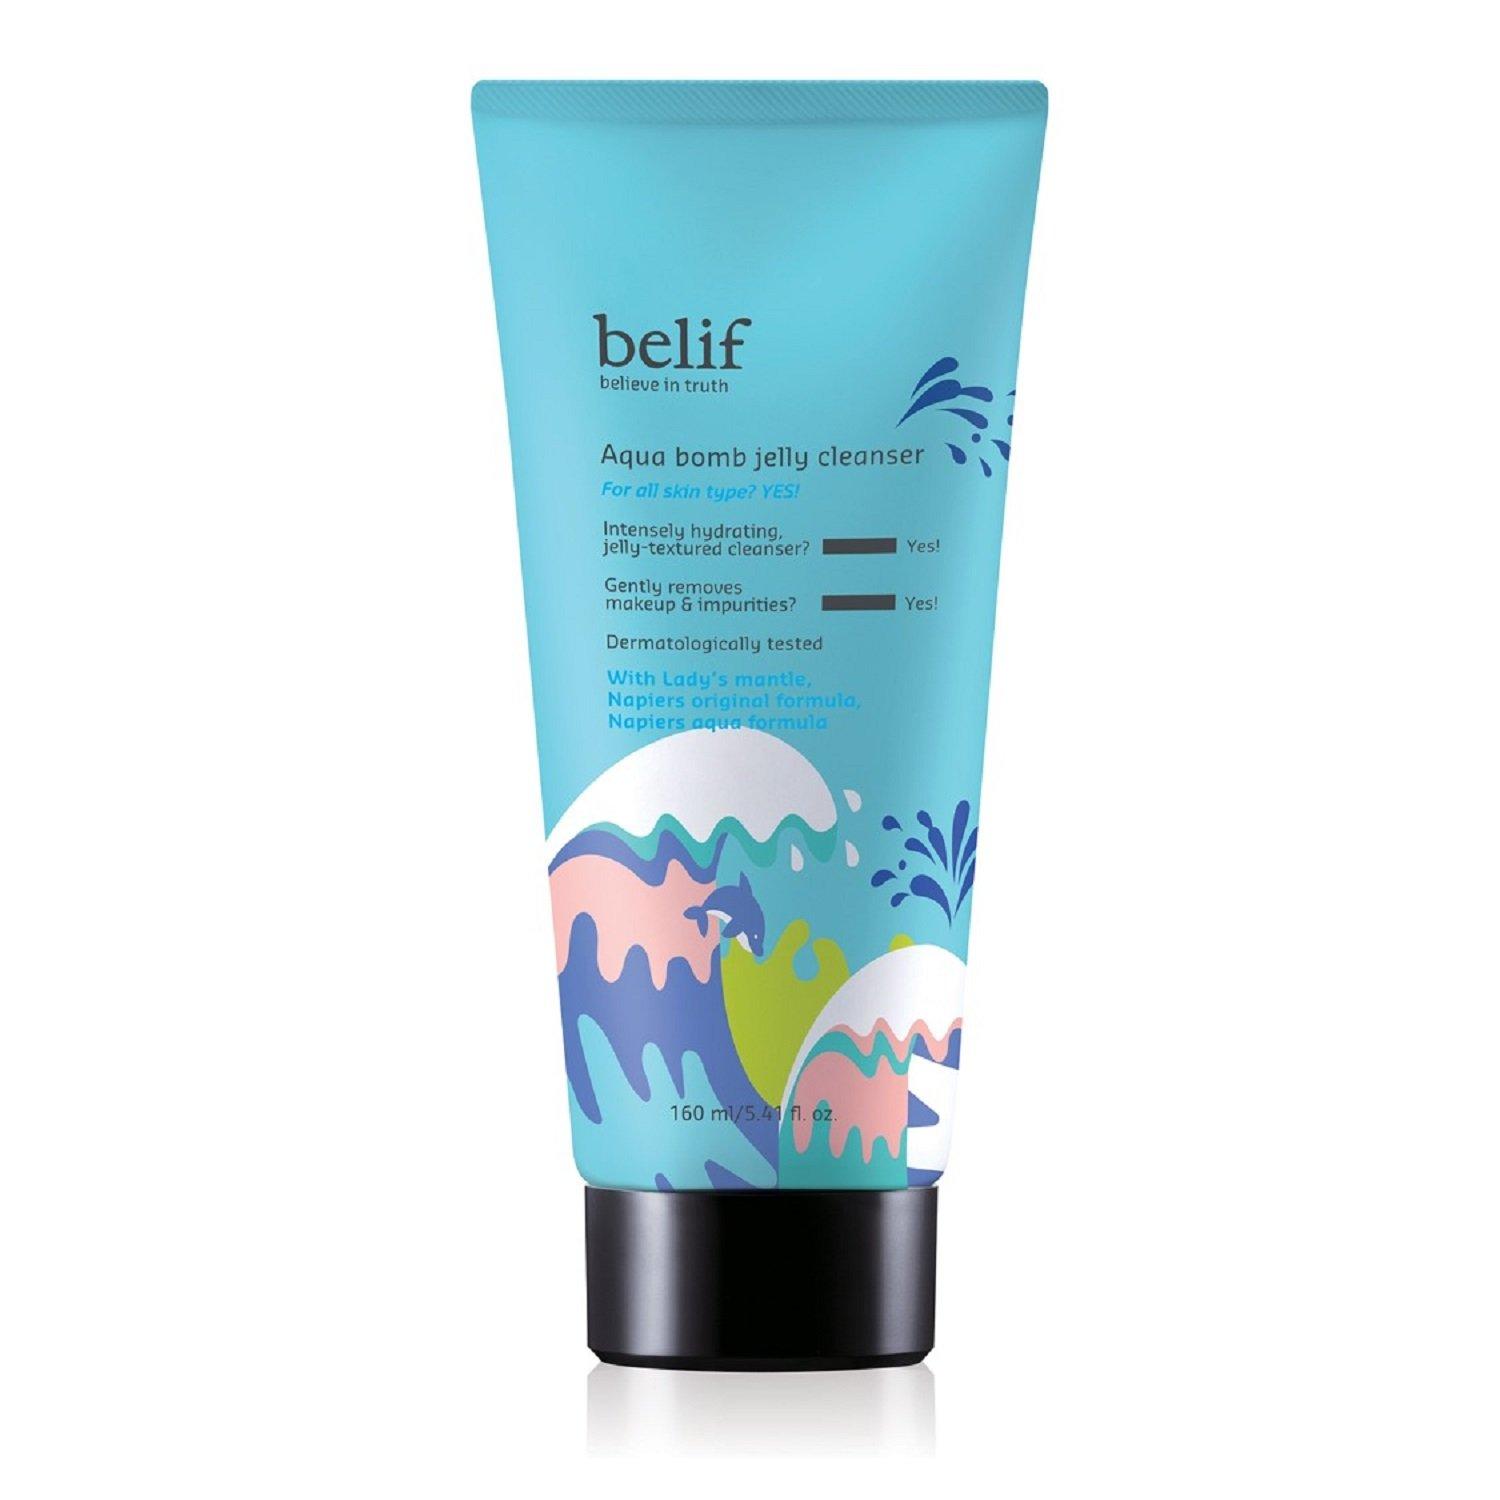 Image of belif Aqua Bomb Jelly Cleanser